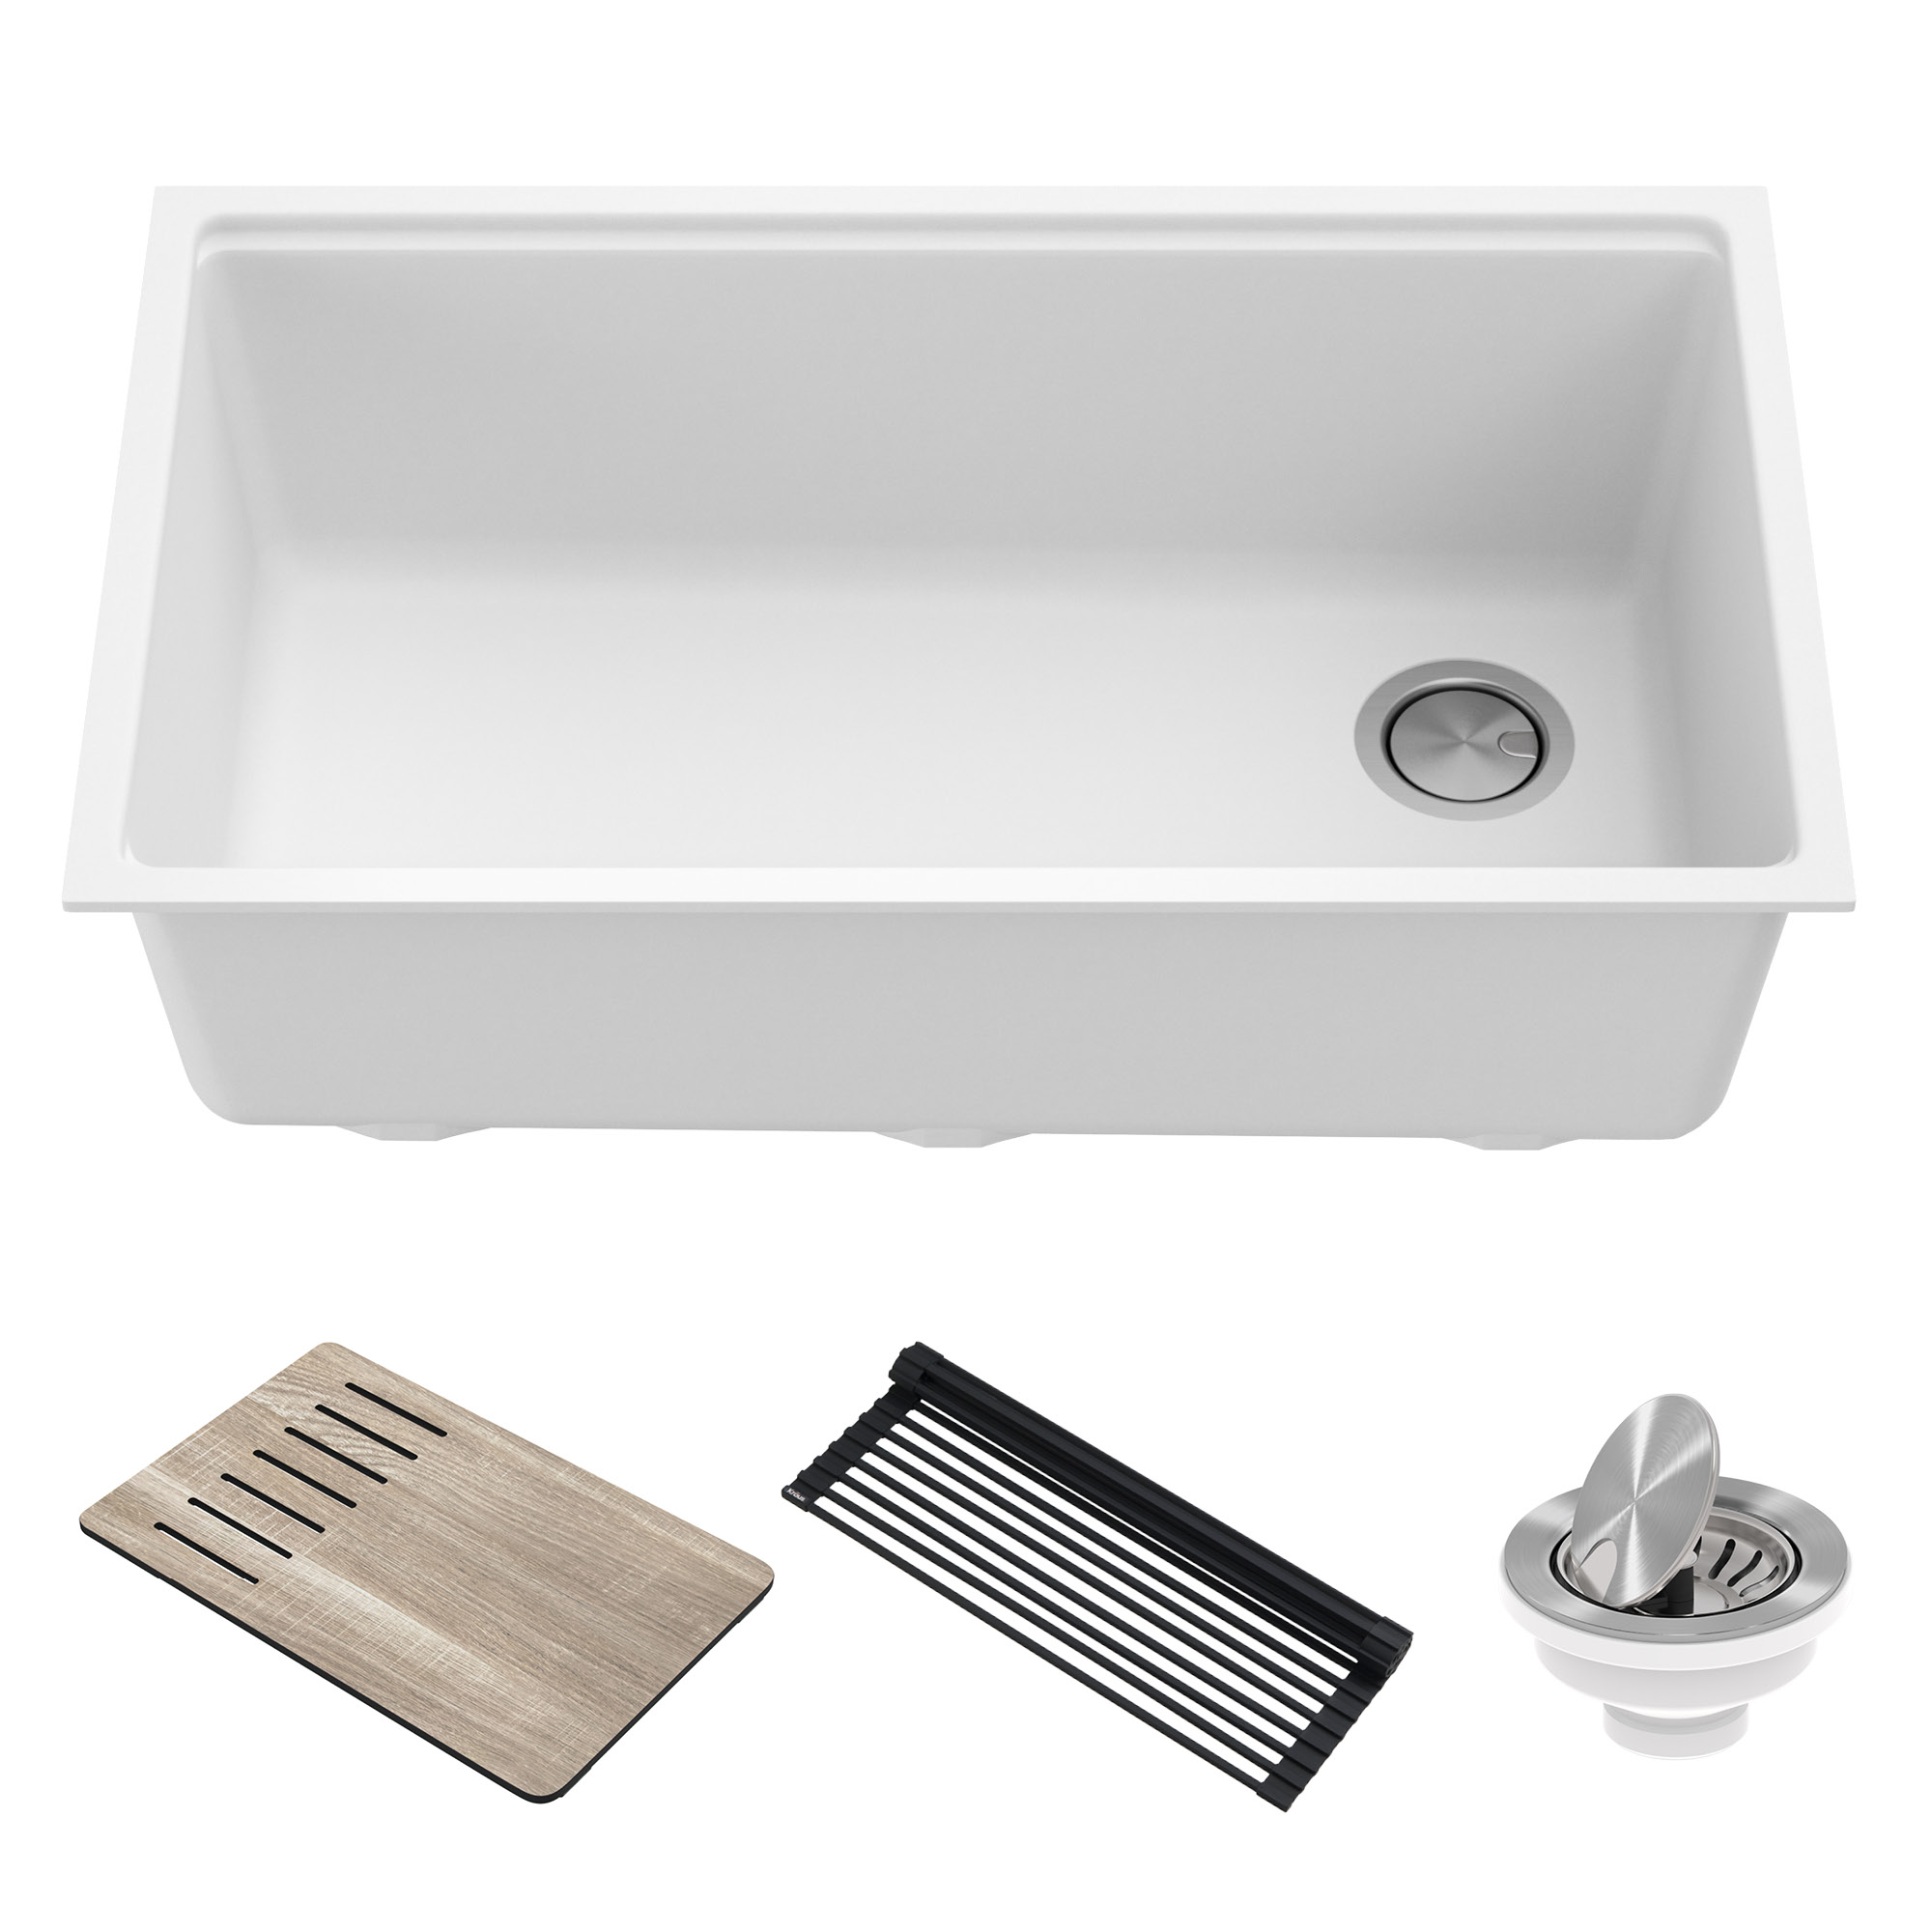 KRAUS Bellucci Workstation 33 inch Undermount Granite Composite Single Bowl Kitchen Sink in White with Accessories - image 1 of 21